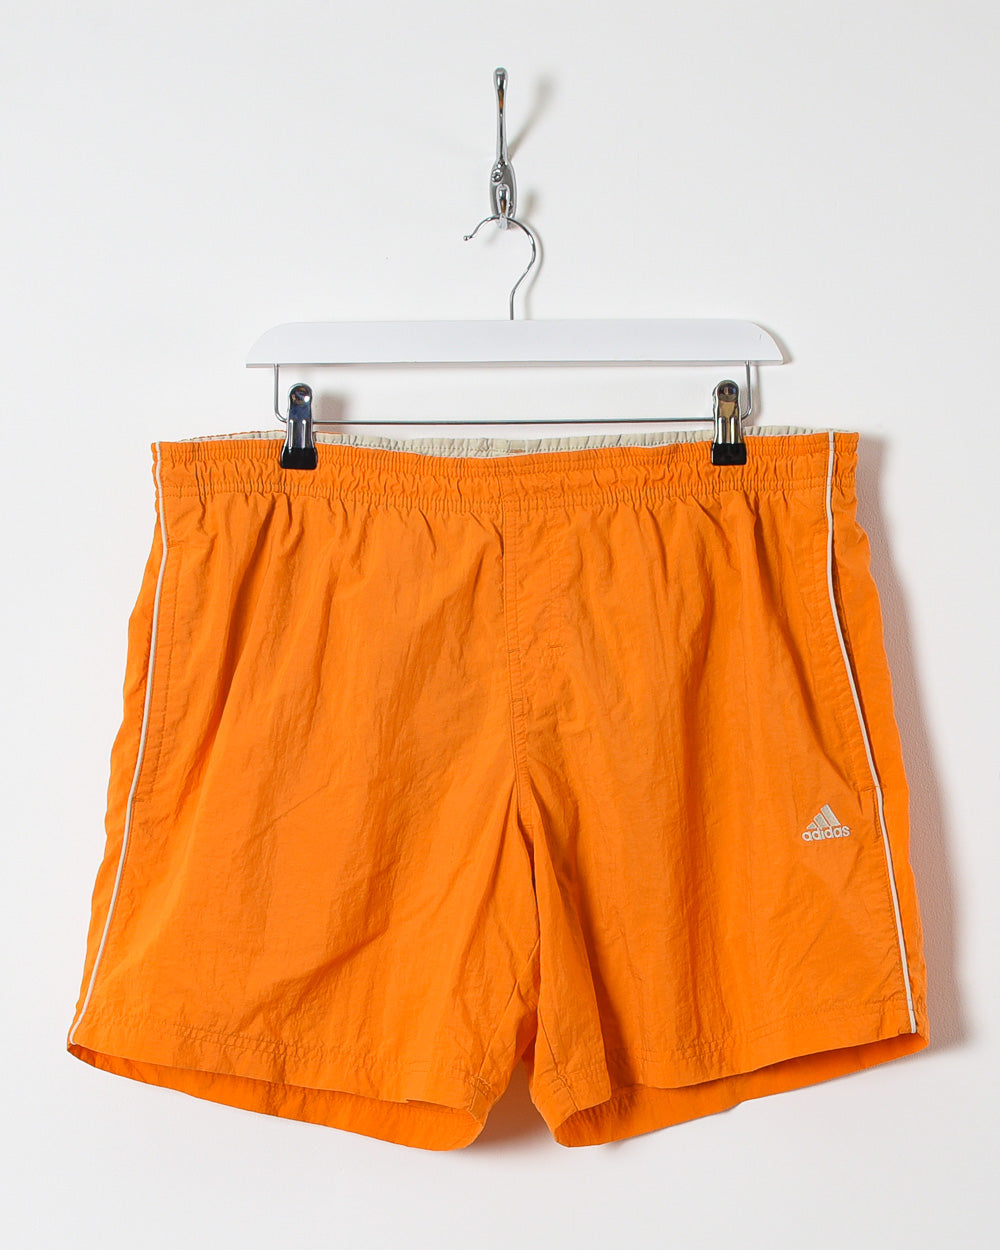 Adidas Swimwear Shorts - W38 - Domno Vintage 90s, 80s, 00s Retro and Vintage Clothing 